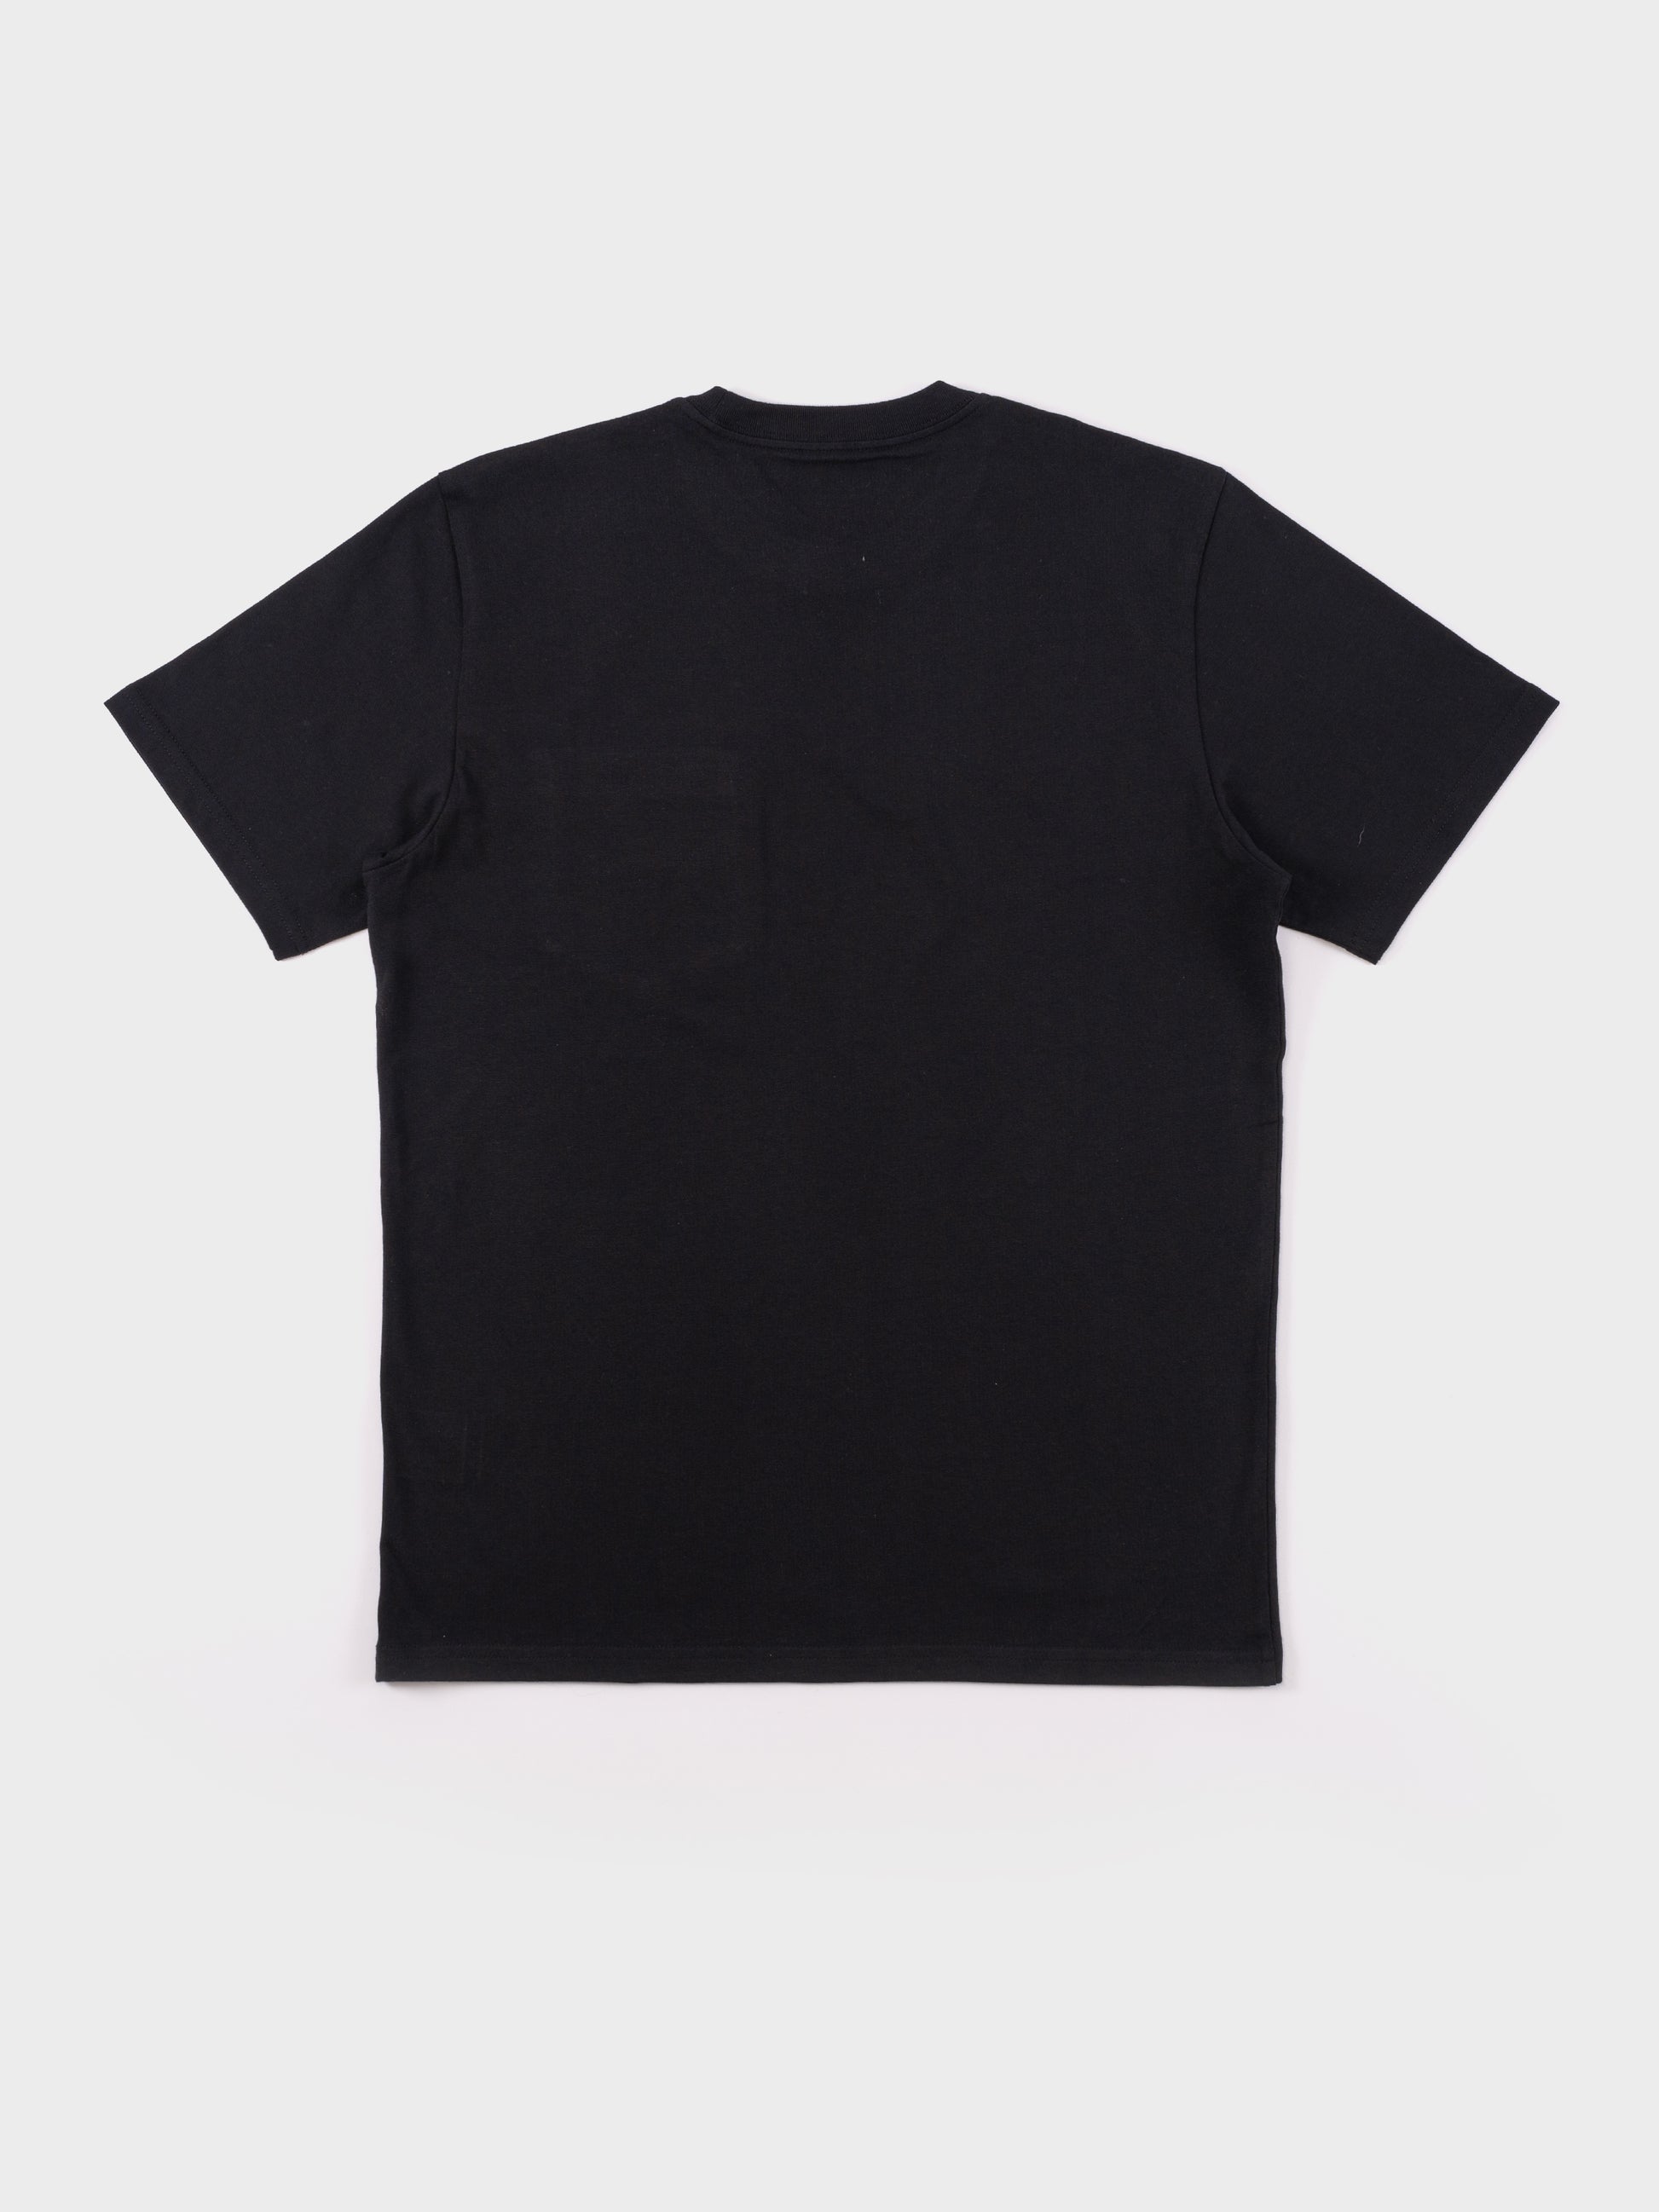 Carhartt S/S Pocket T Shirt - Black